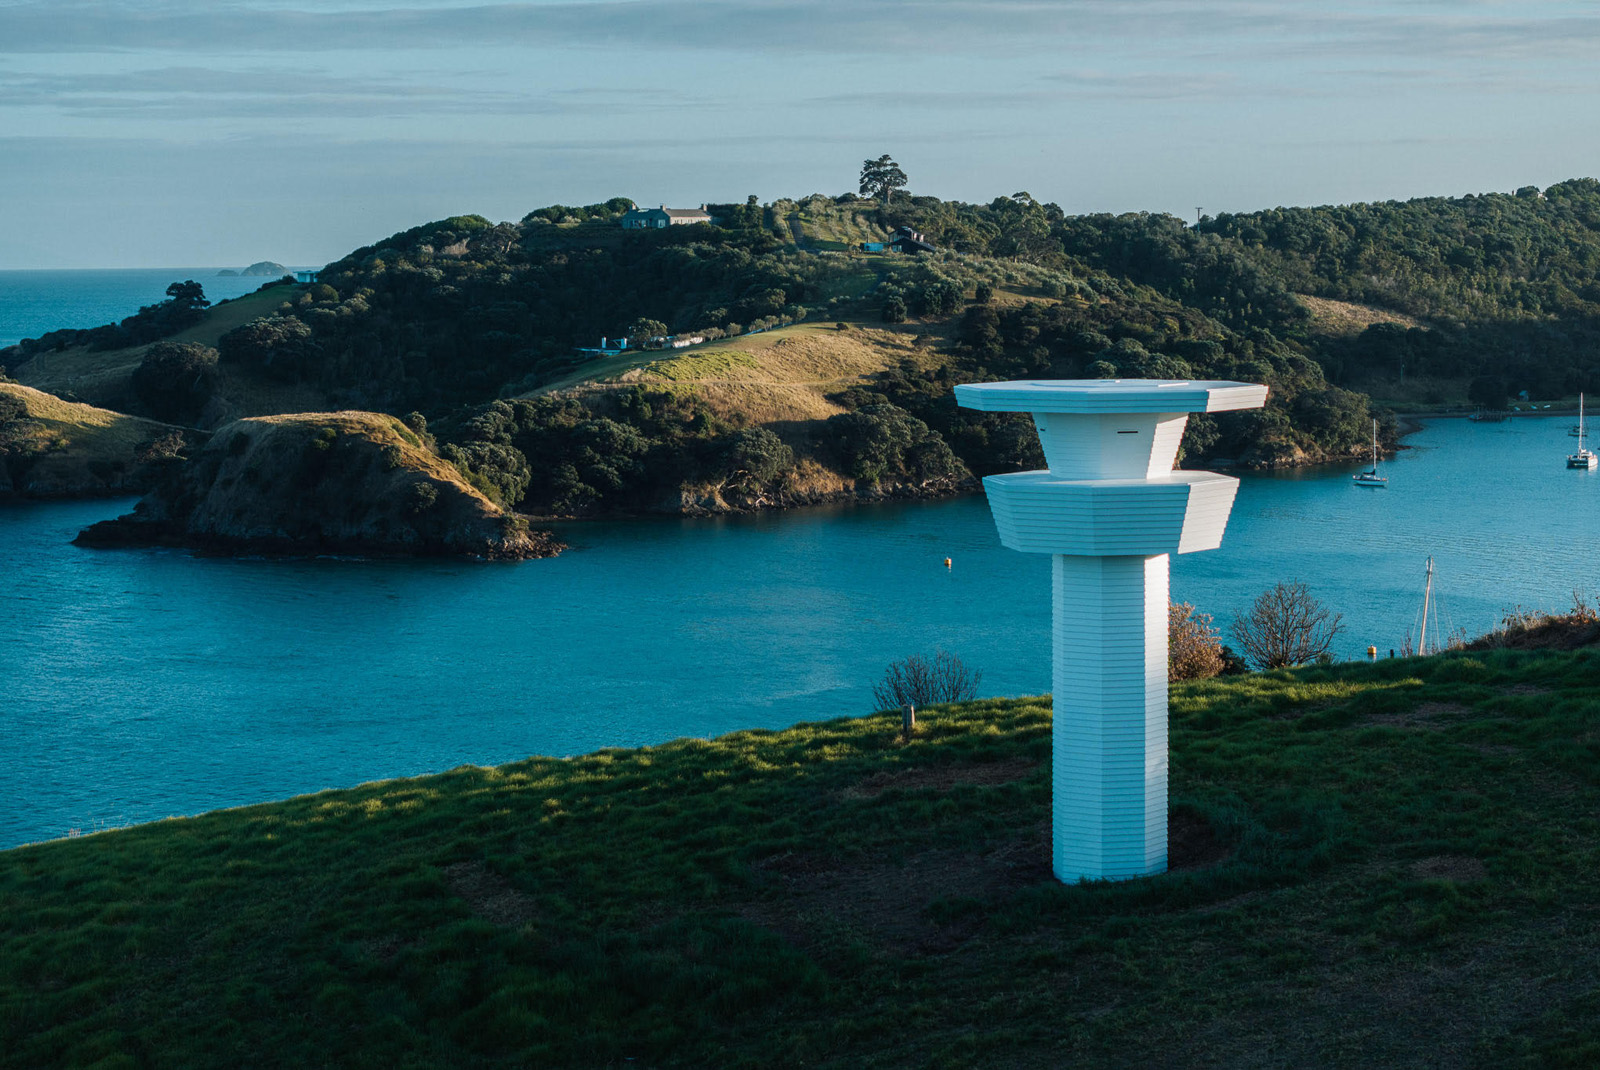 Wakefield Dreaming, sculpture by New Zealand artist Brett Graham